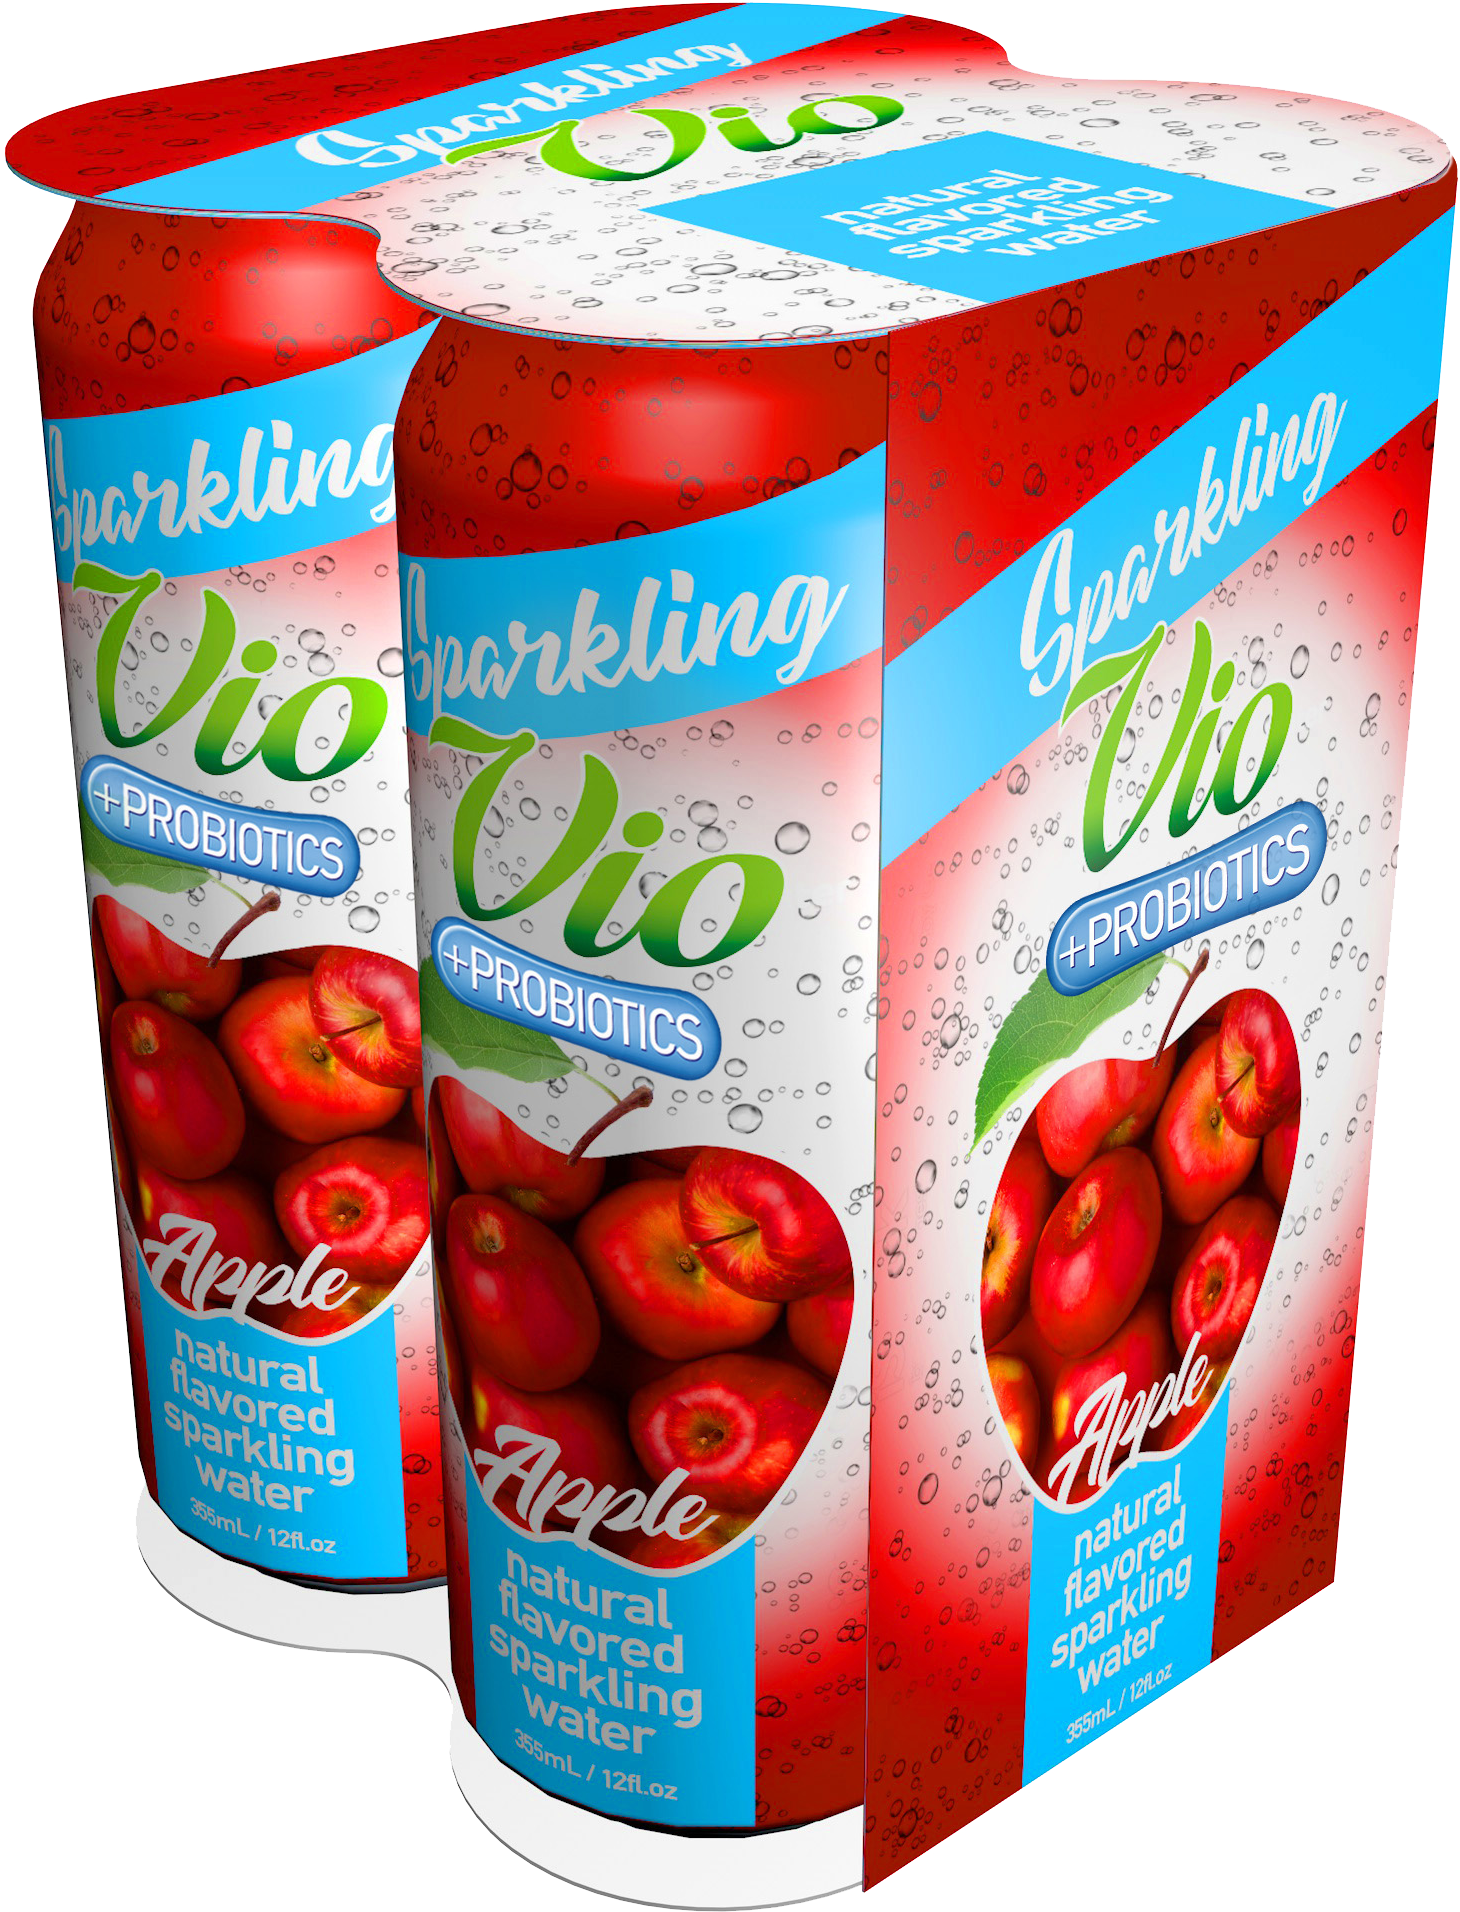 Sparkling-Vio-4pack+probiotics